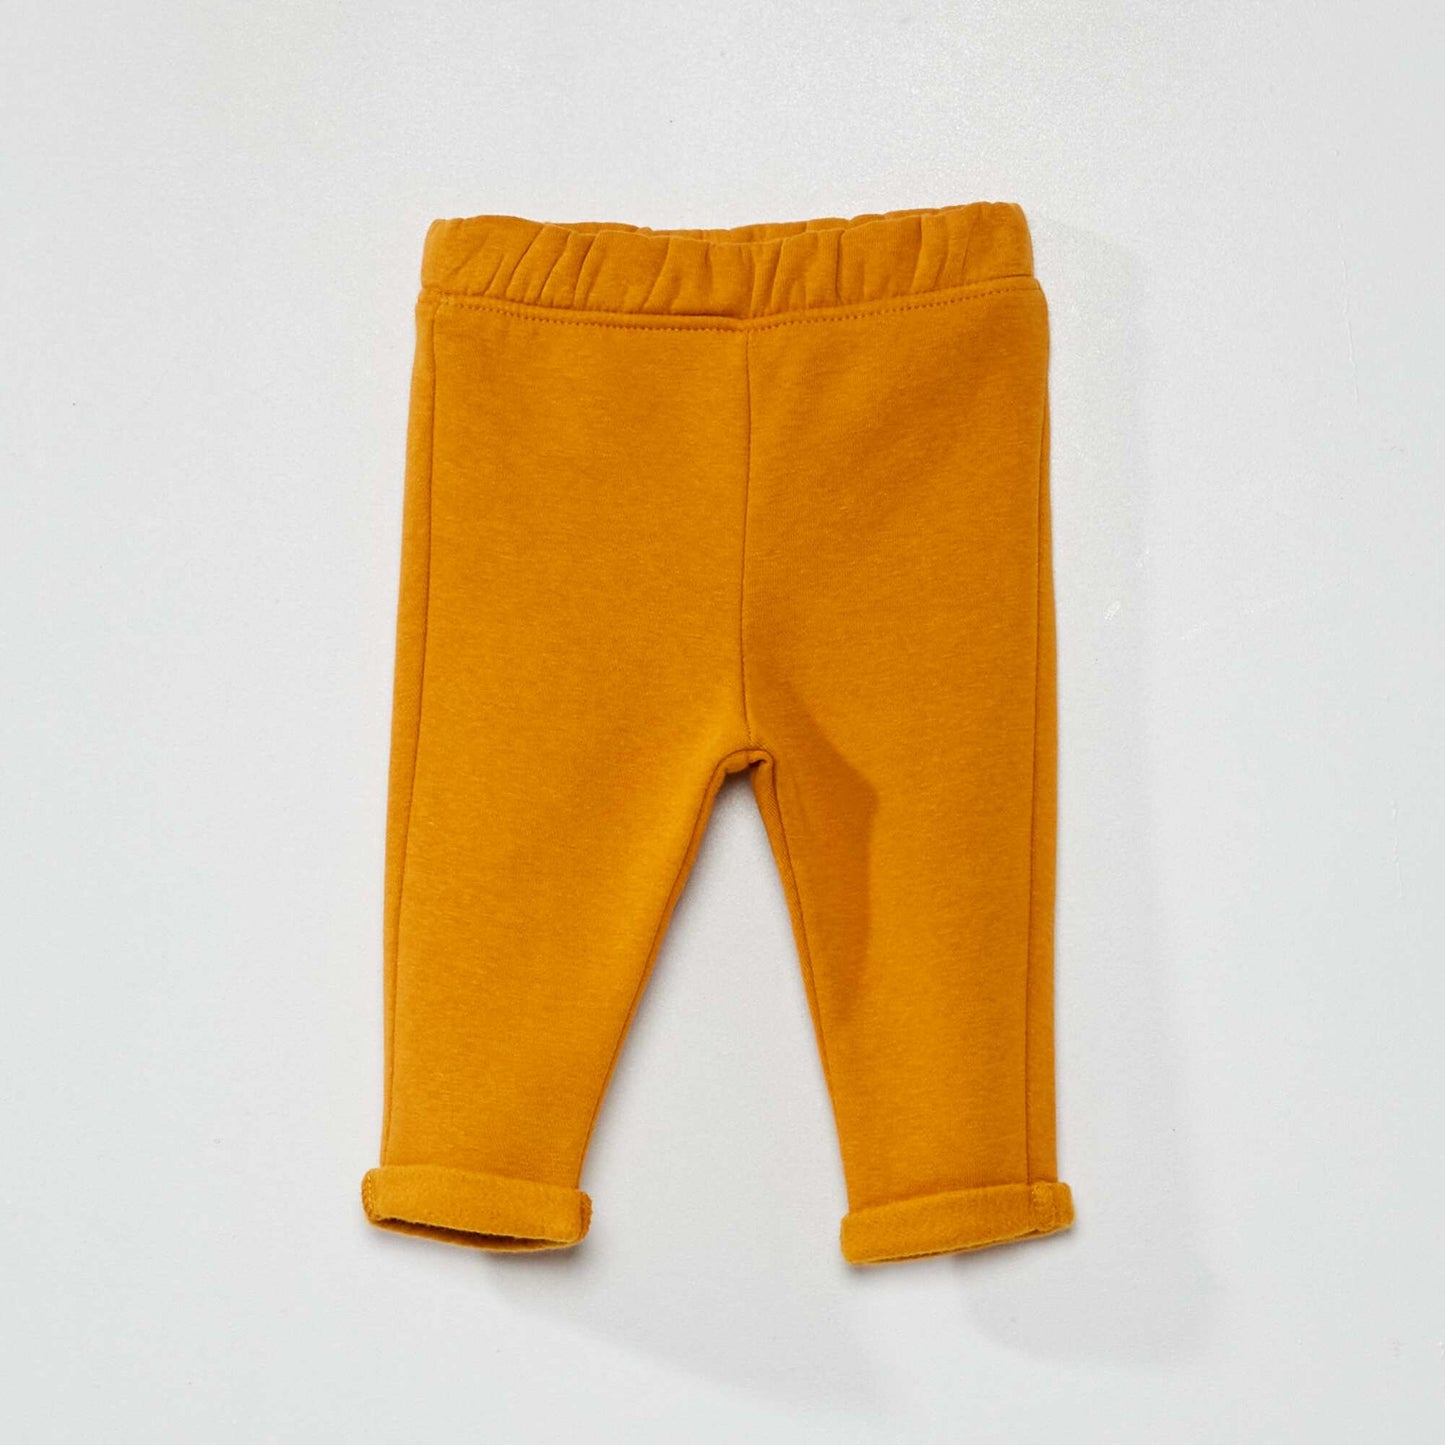 Sweatshirt fabric set - Sweatshirt and trousers - Two-piece set YELLOW